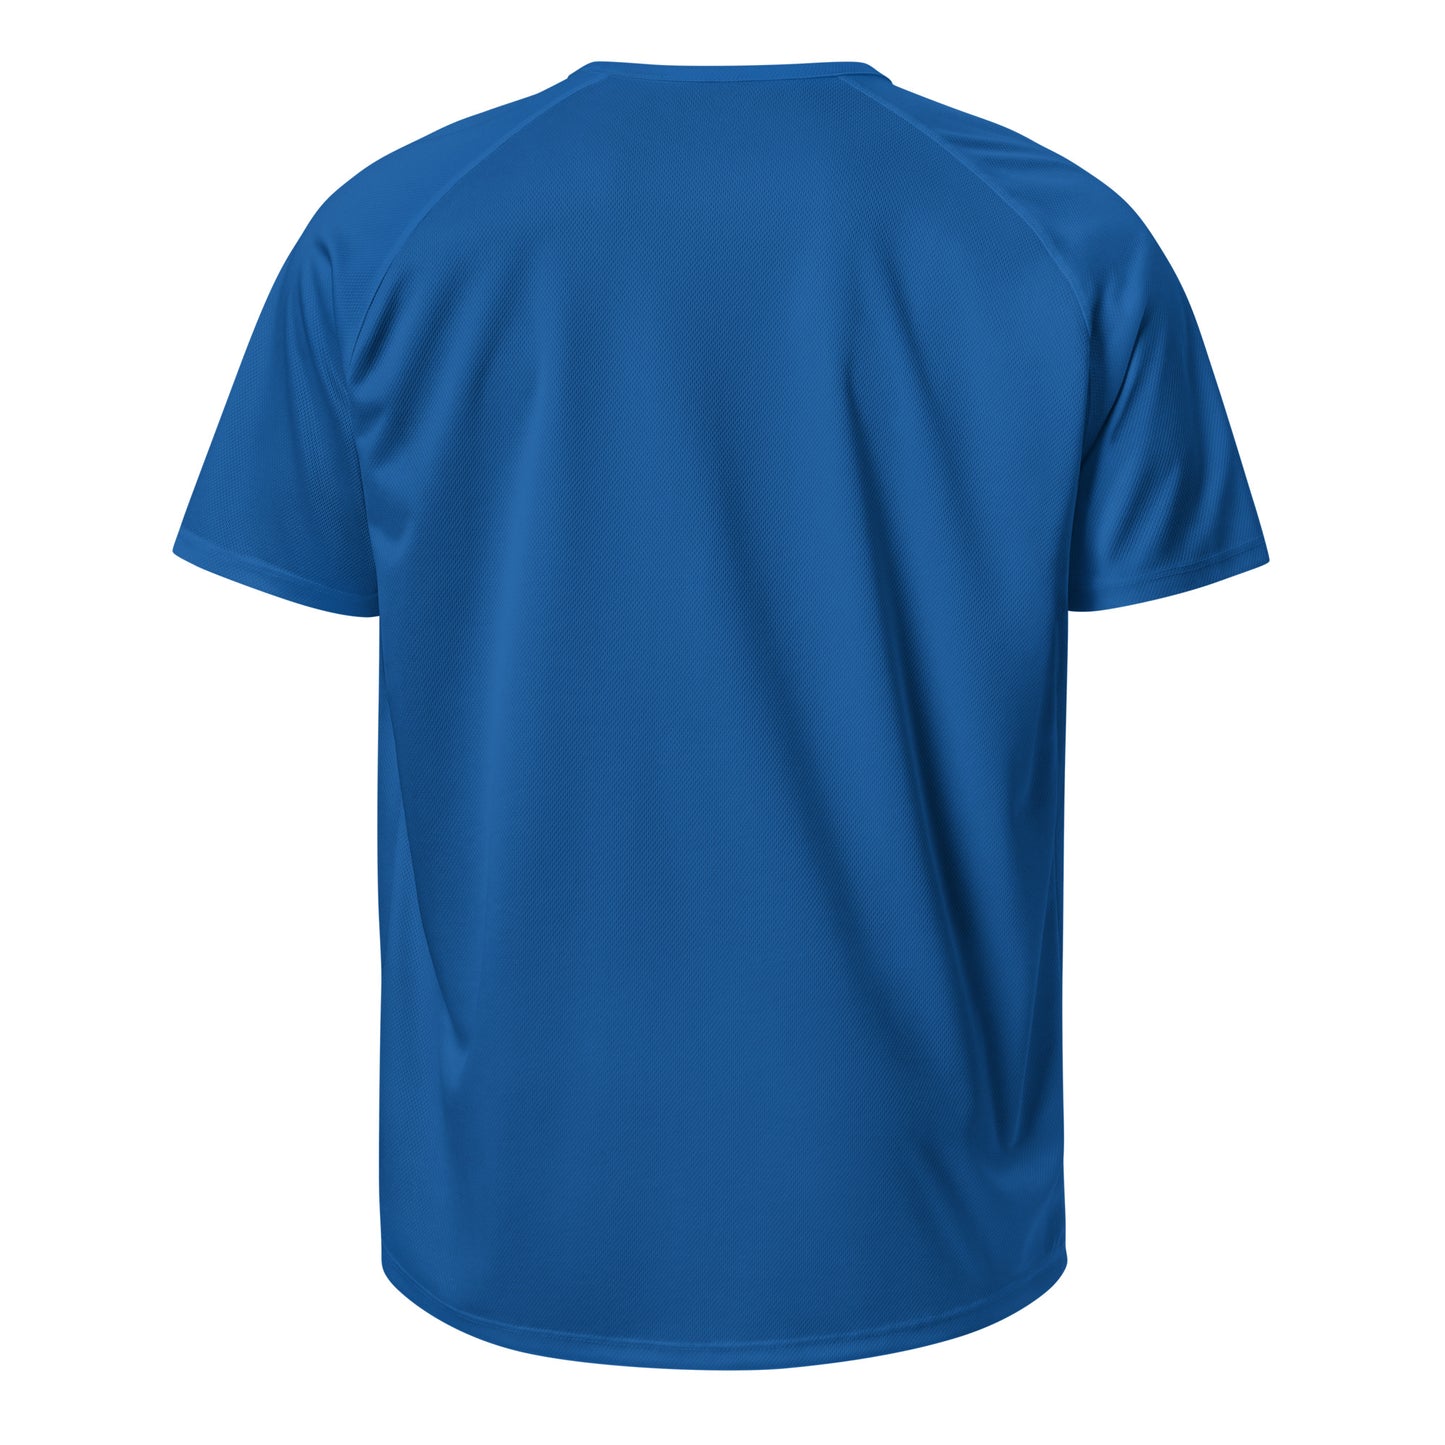 E133 - Sports/Breathable Fabric (MX win : Blue)